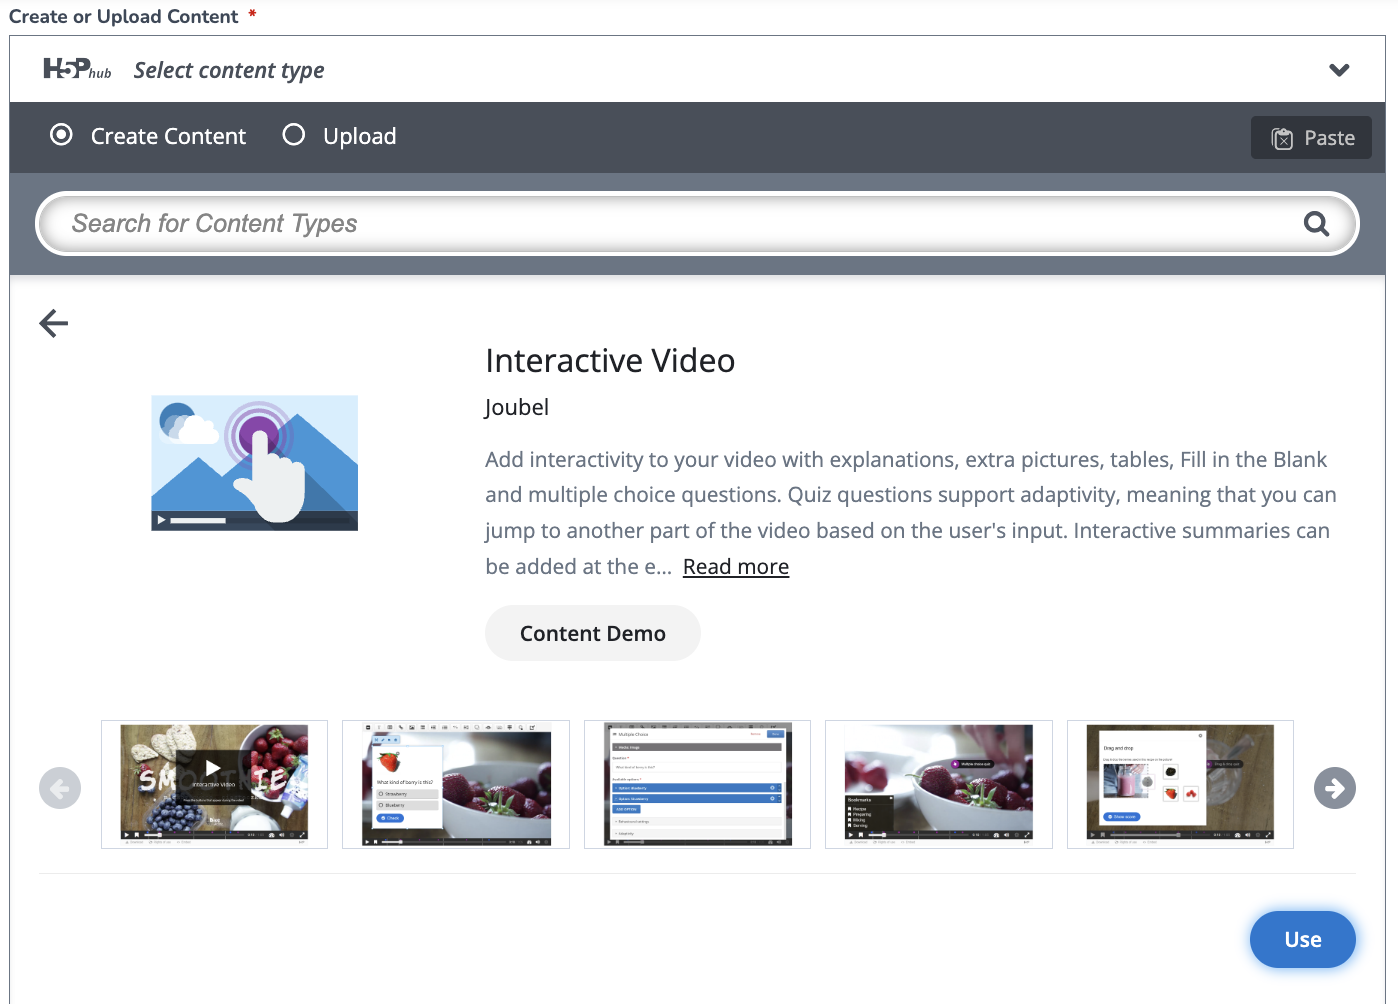 Interactive Video Content Type